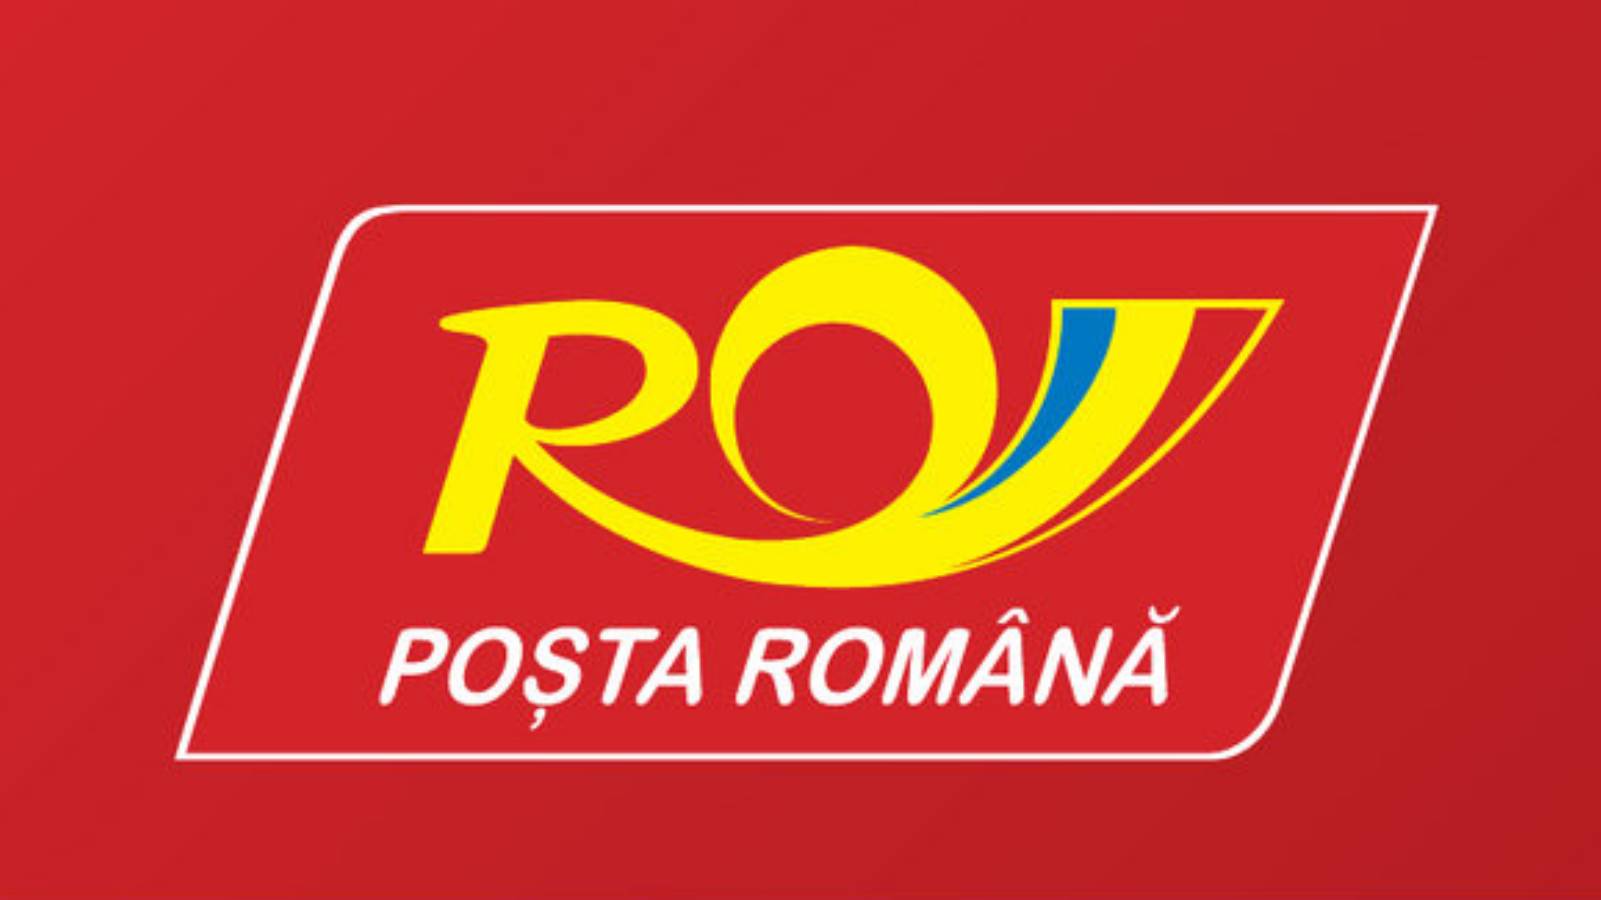 Trafic postal roumain Grande-Bretagne